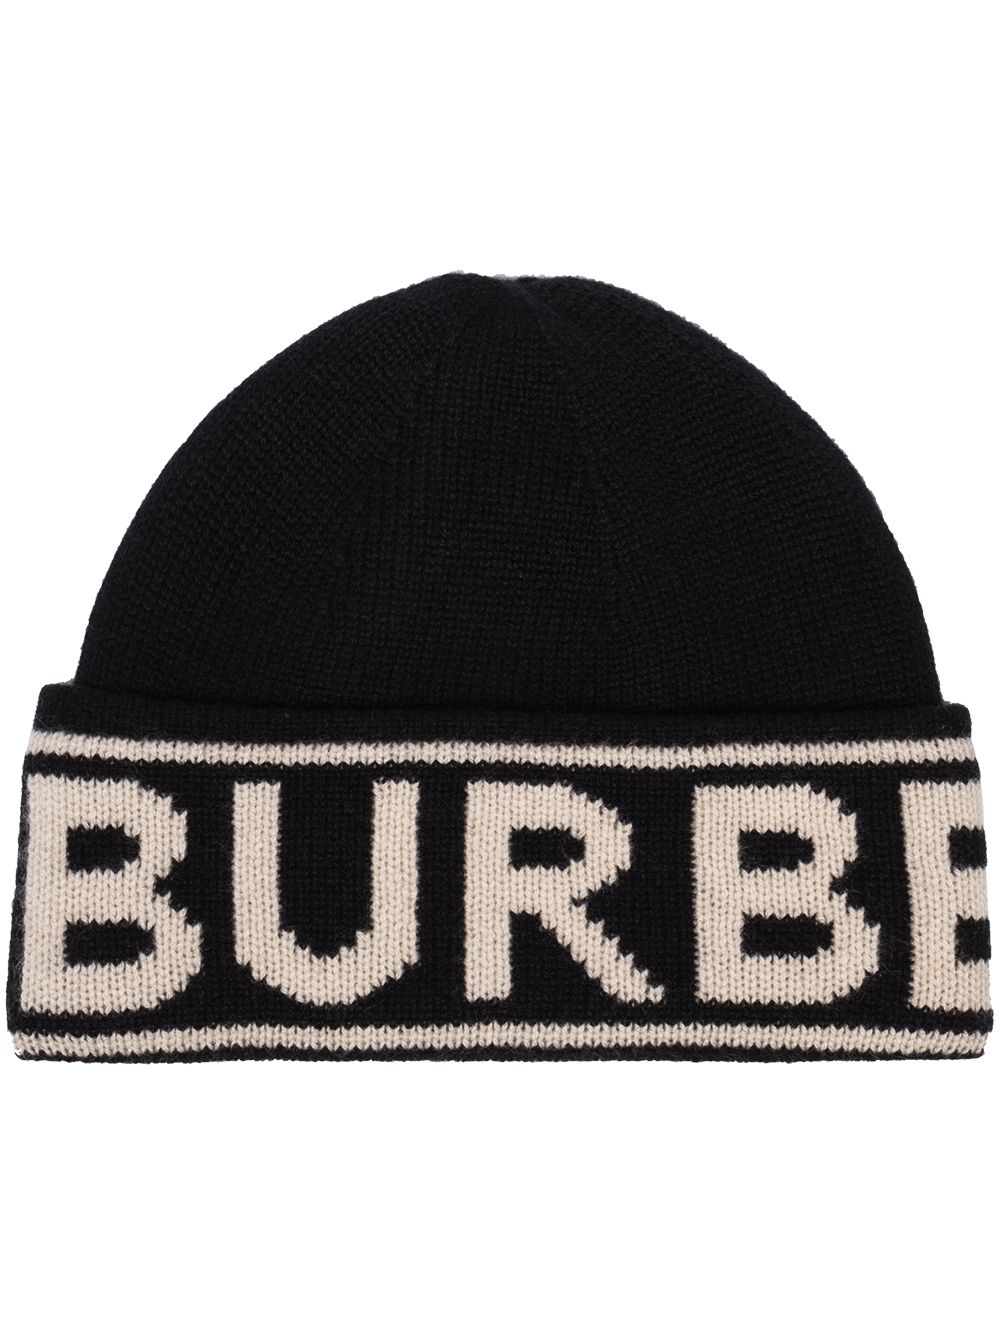 Burberry кашемировая шапка бини с логотипом вязки интарсия от Burberry